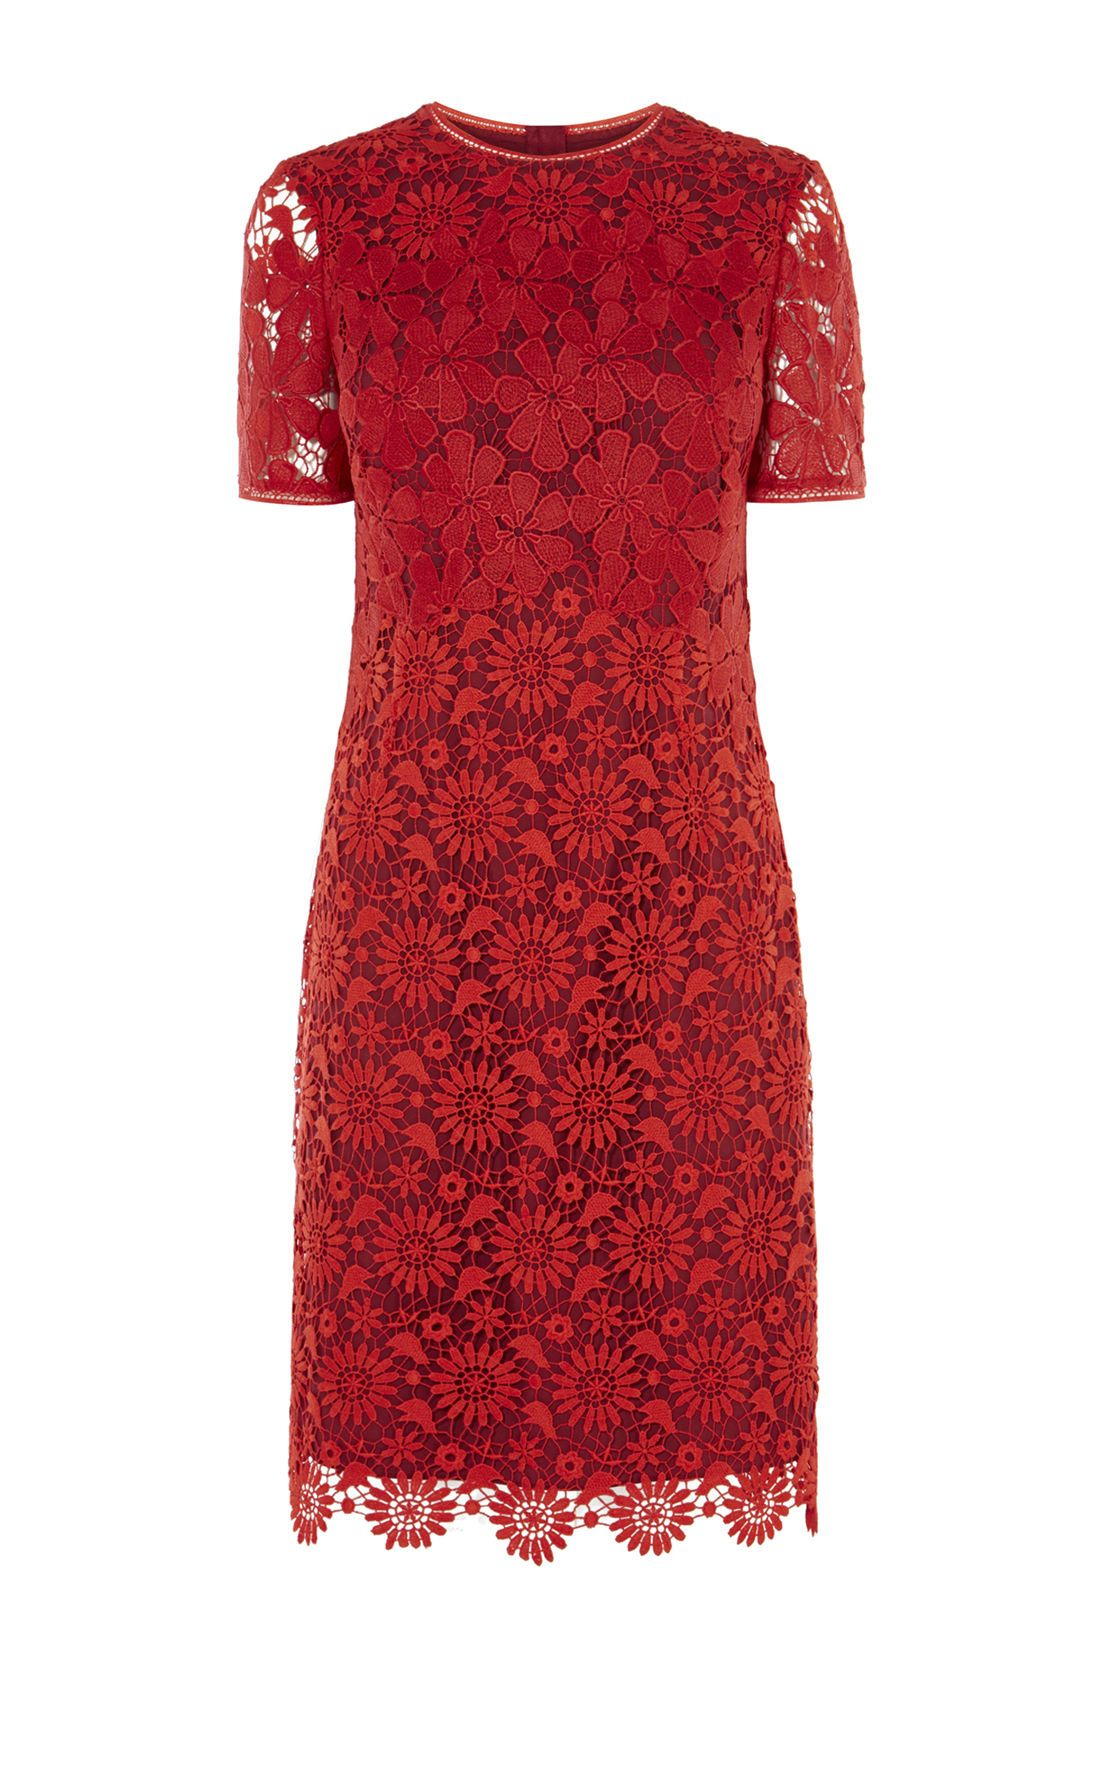 Karen millen Lace Pencil Dress in Red | Lyst